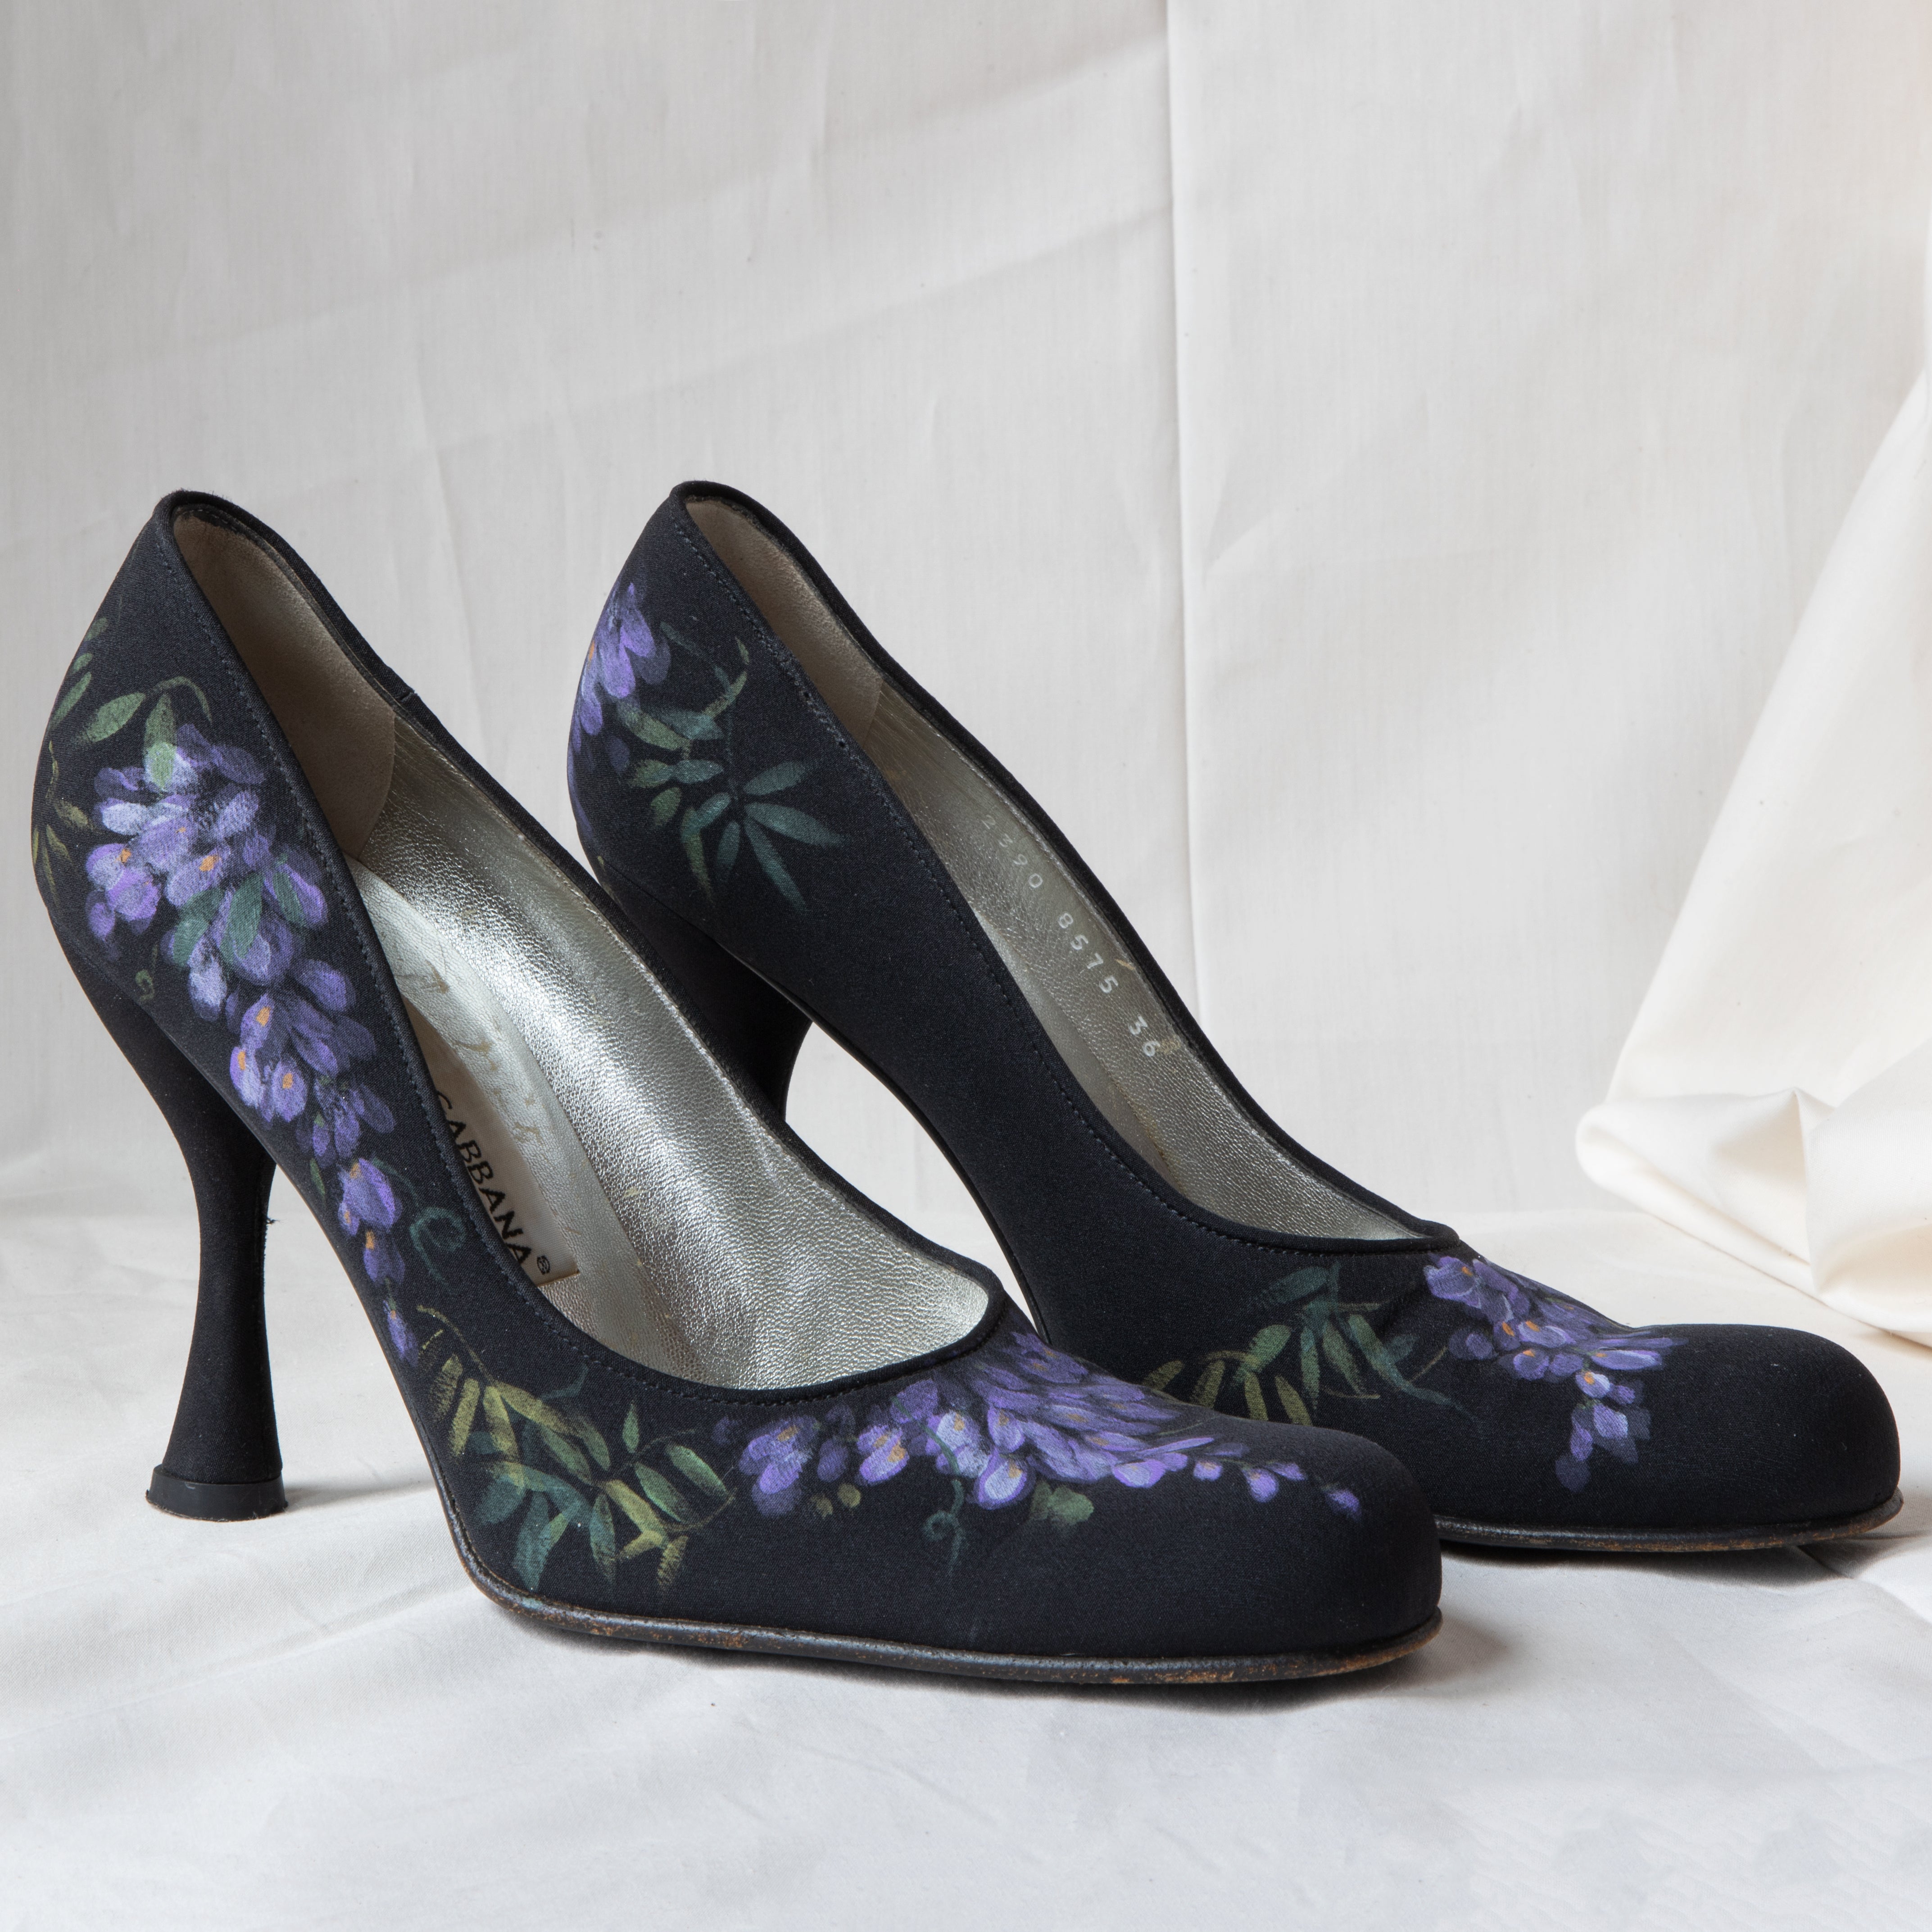 Taylor Reeve turns high heels' soles into art – Orange County Register